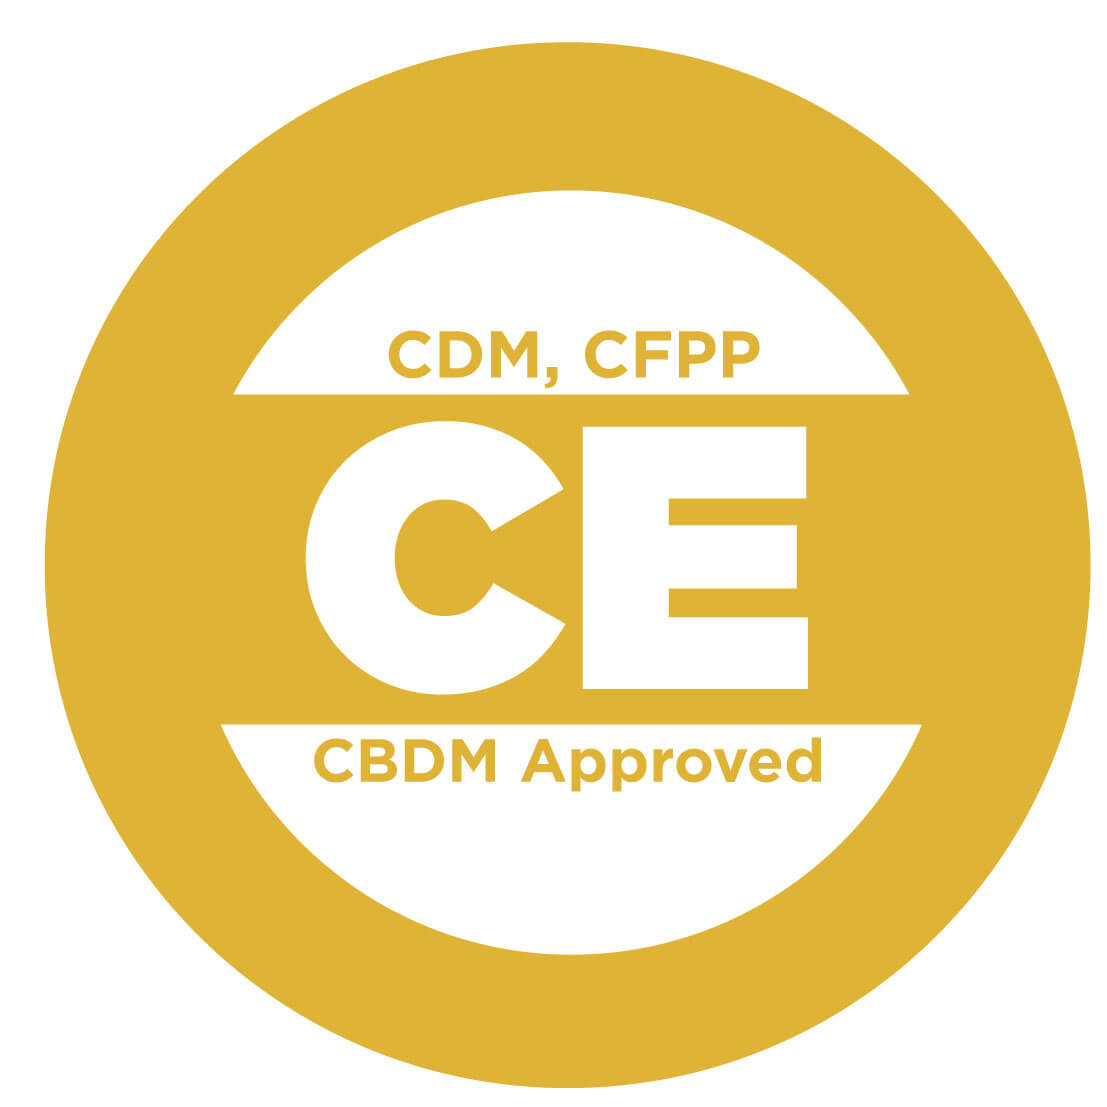 CDM, CFPP, CBDM Approved CE logo